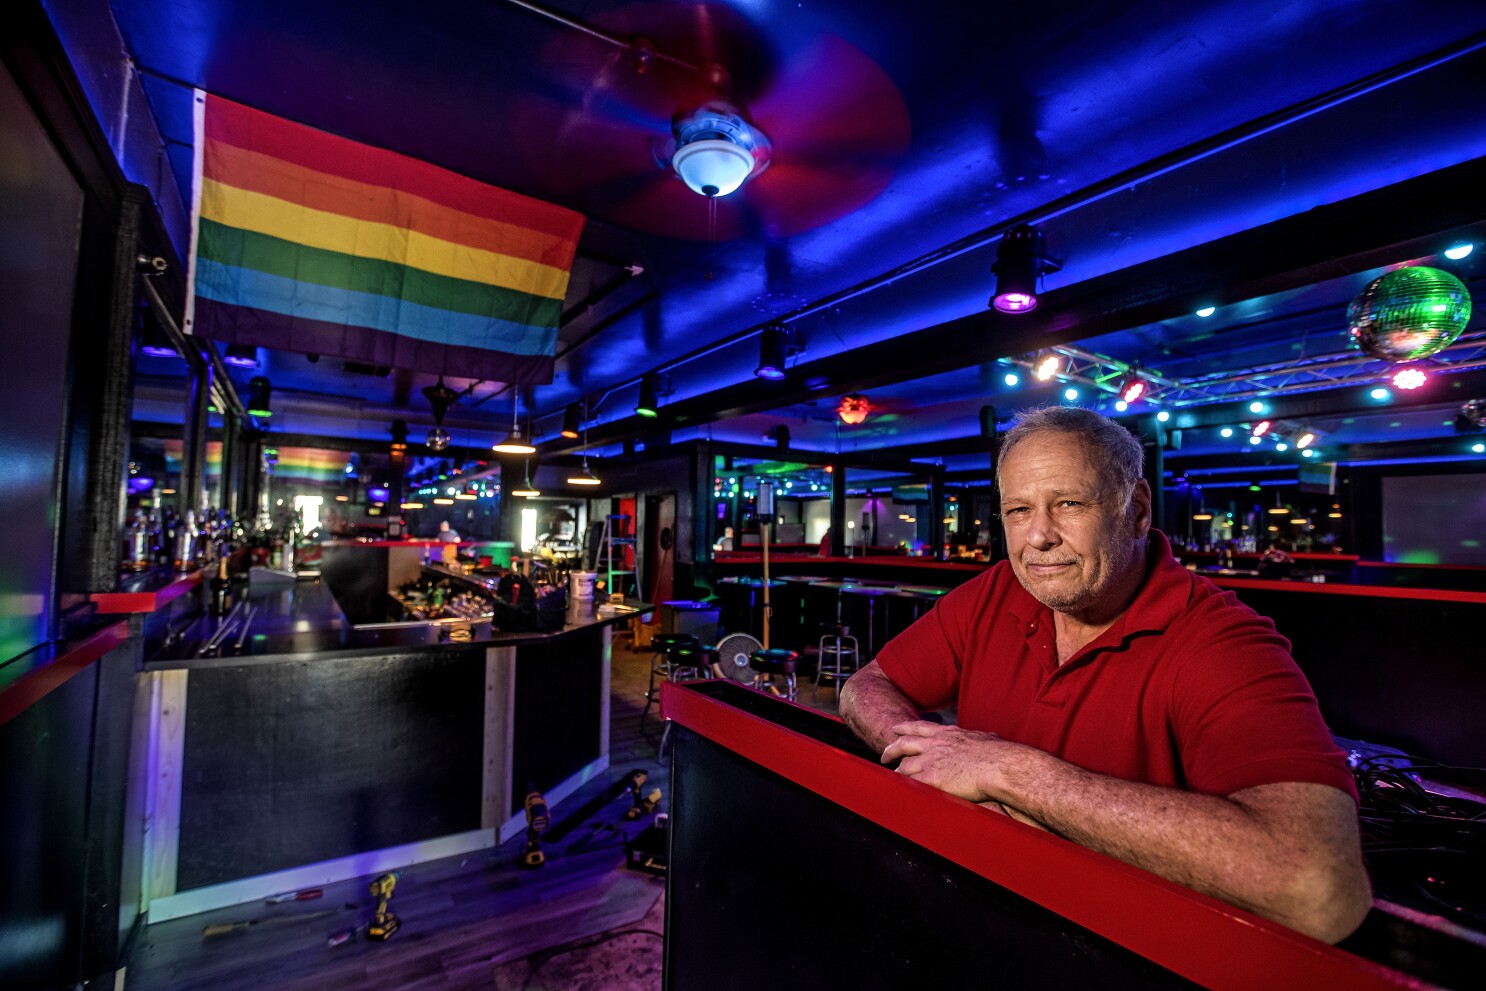 find gay bars in vegas